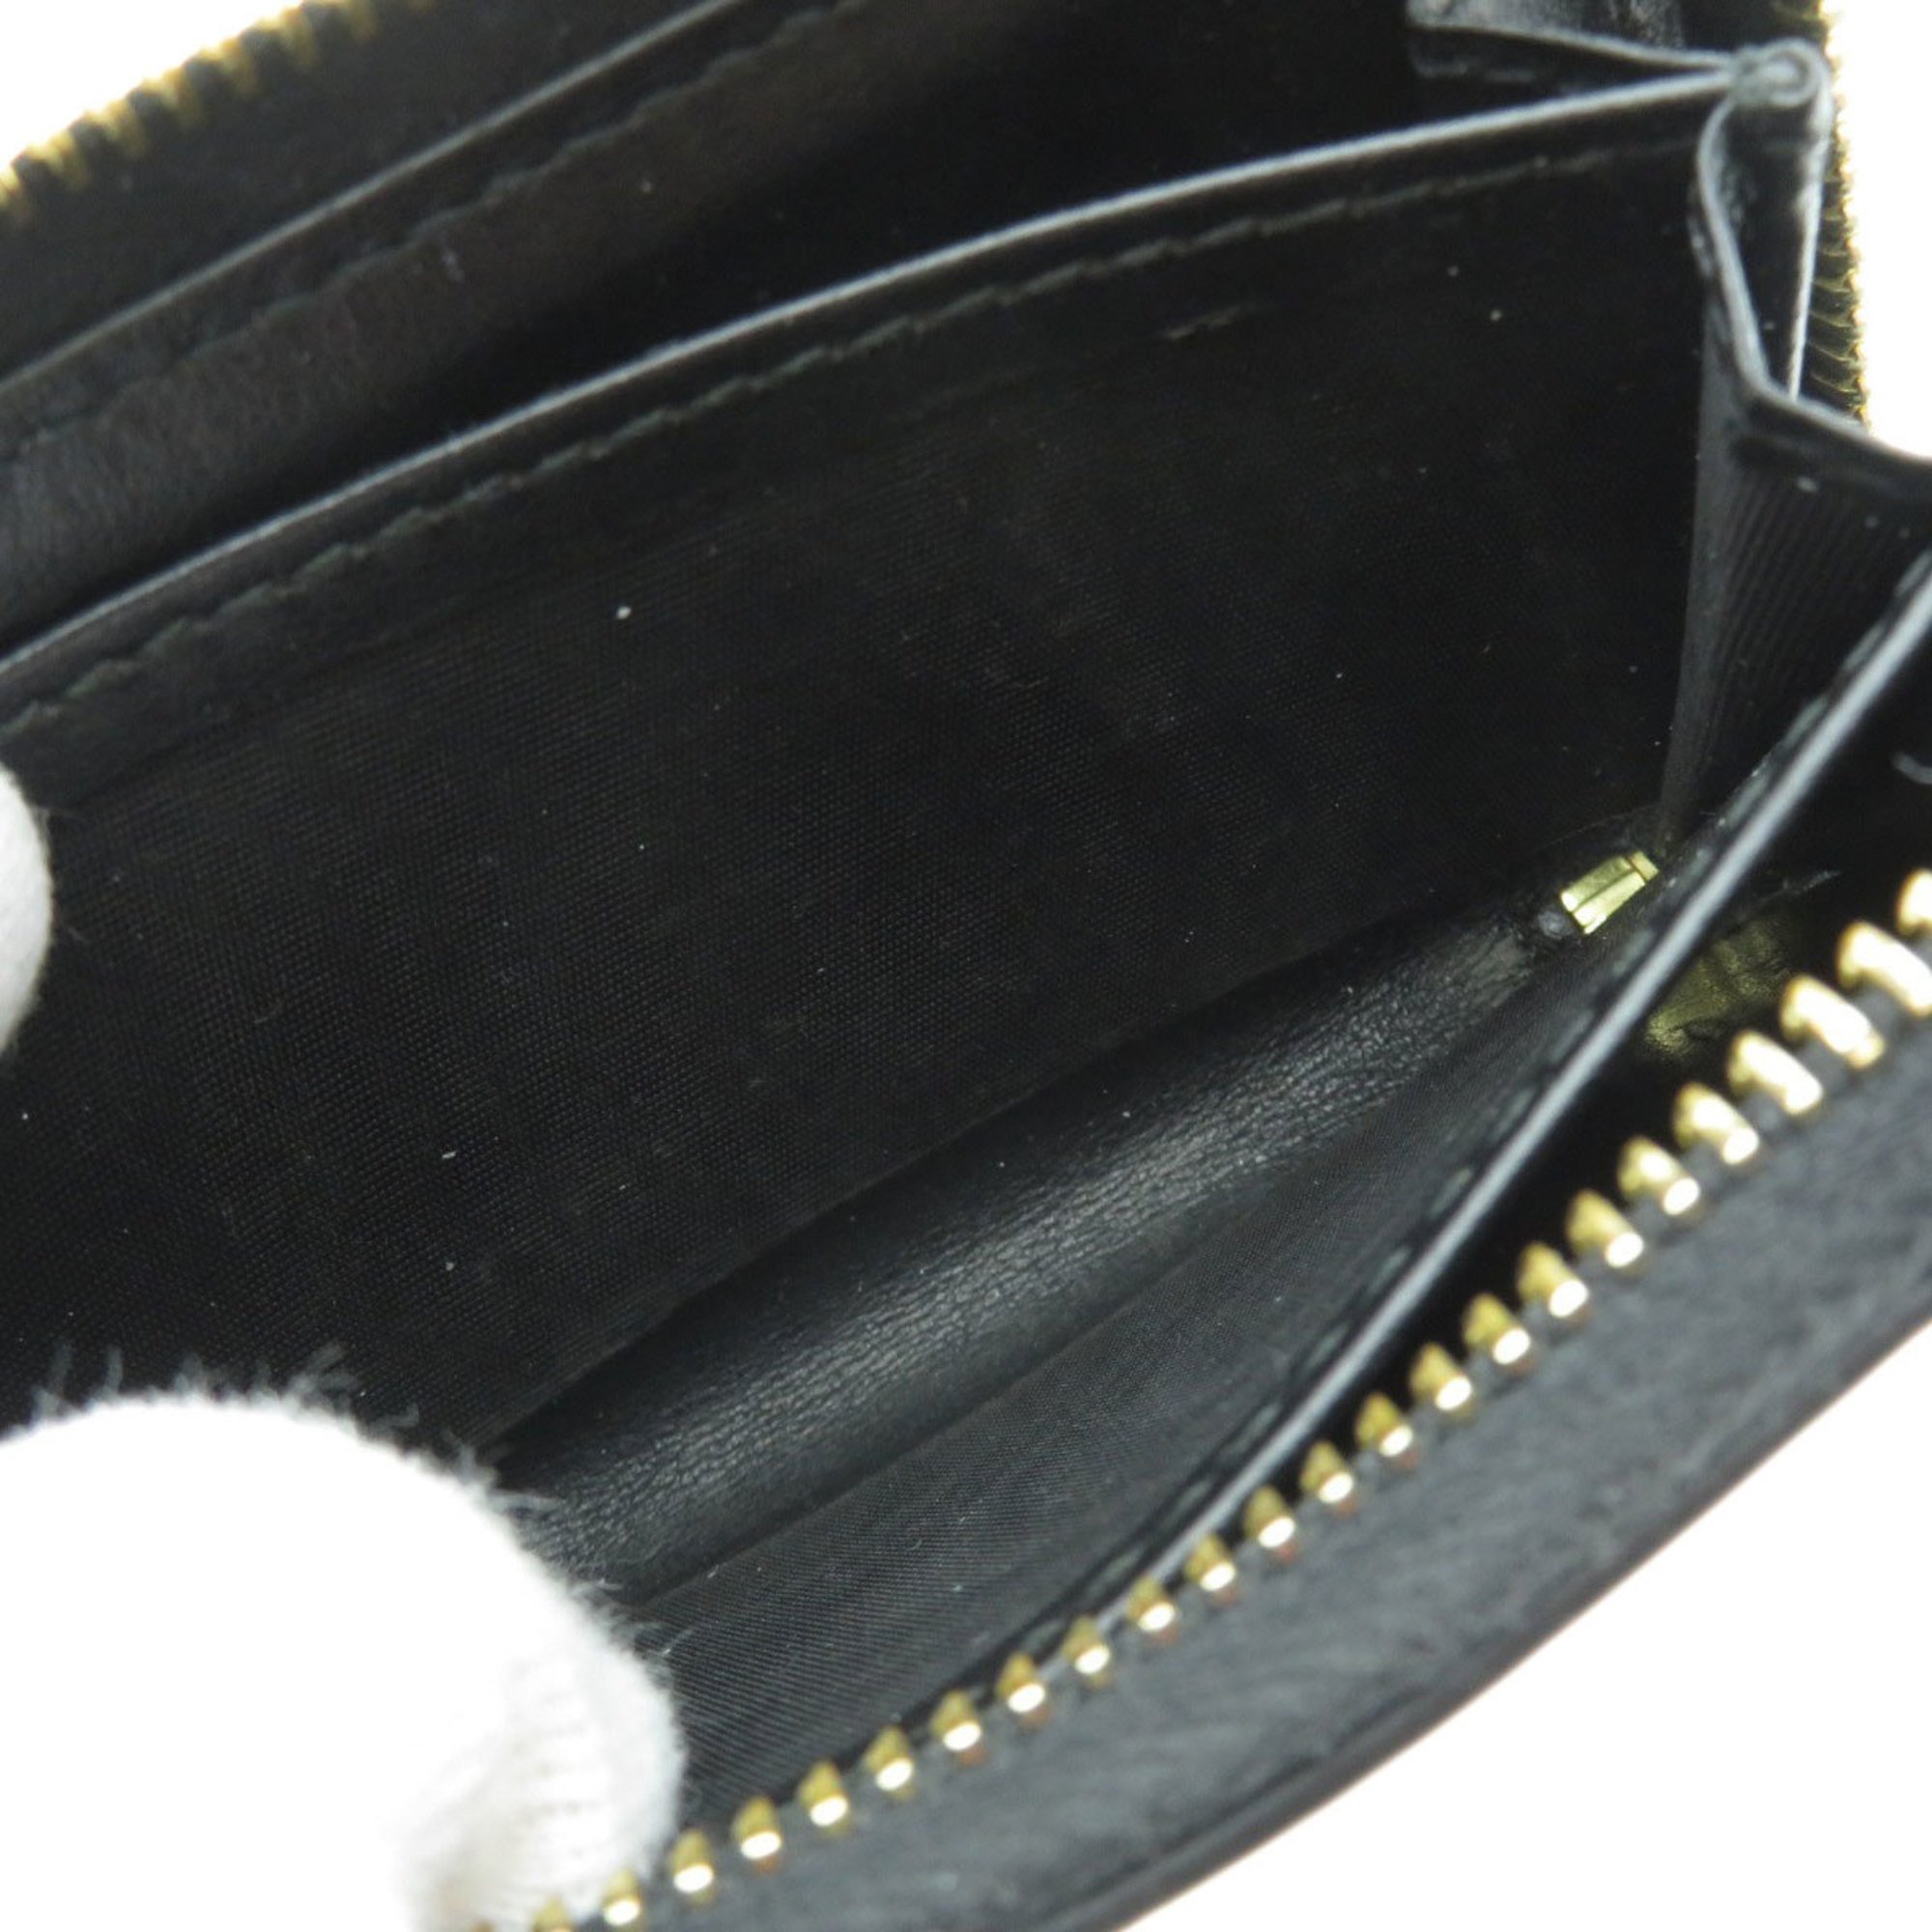 Gucci 547597 Motif Business Card Holder/Card Case Calf Leather Women's